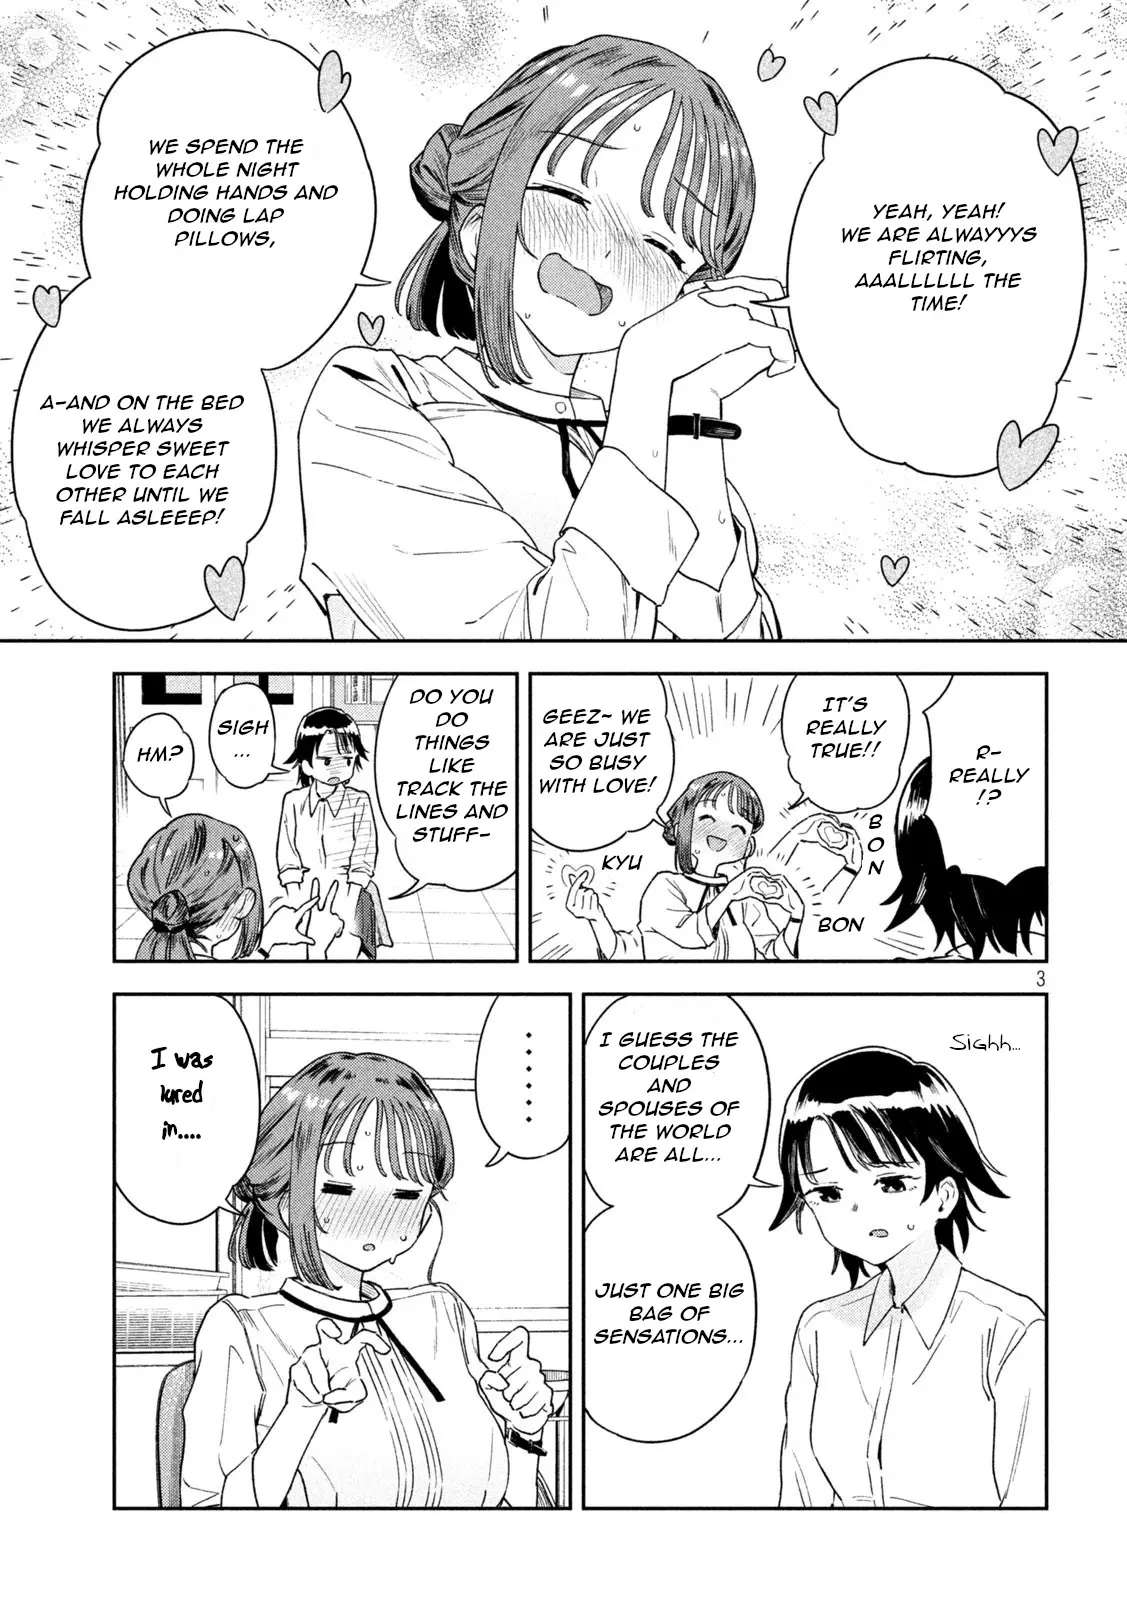 Miyo-Chan Sensei Said So - 6 page 3-8e87a718